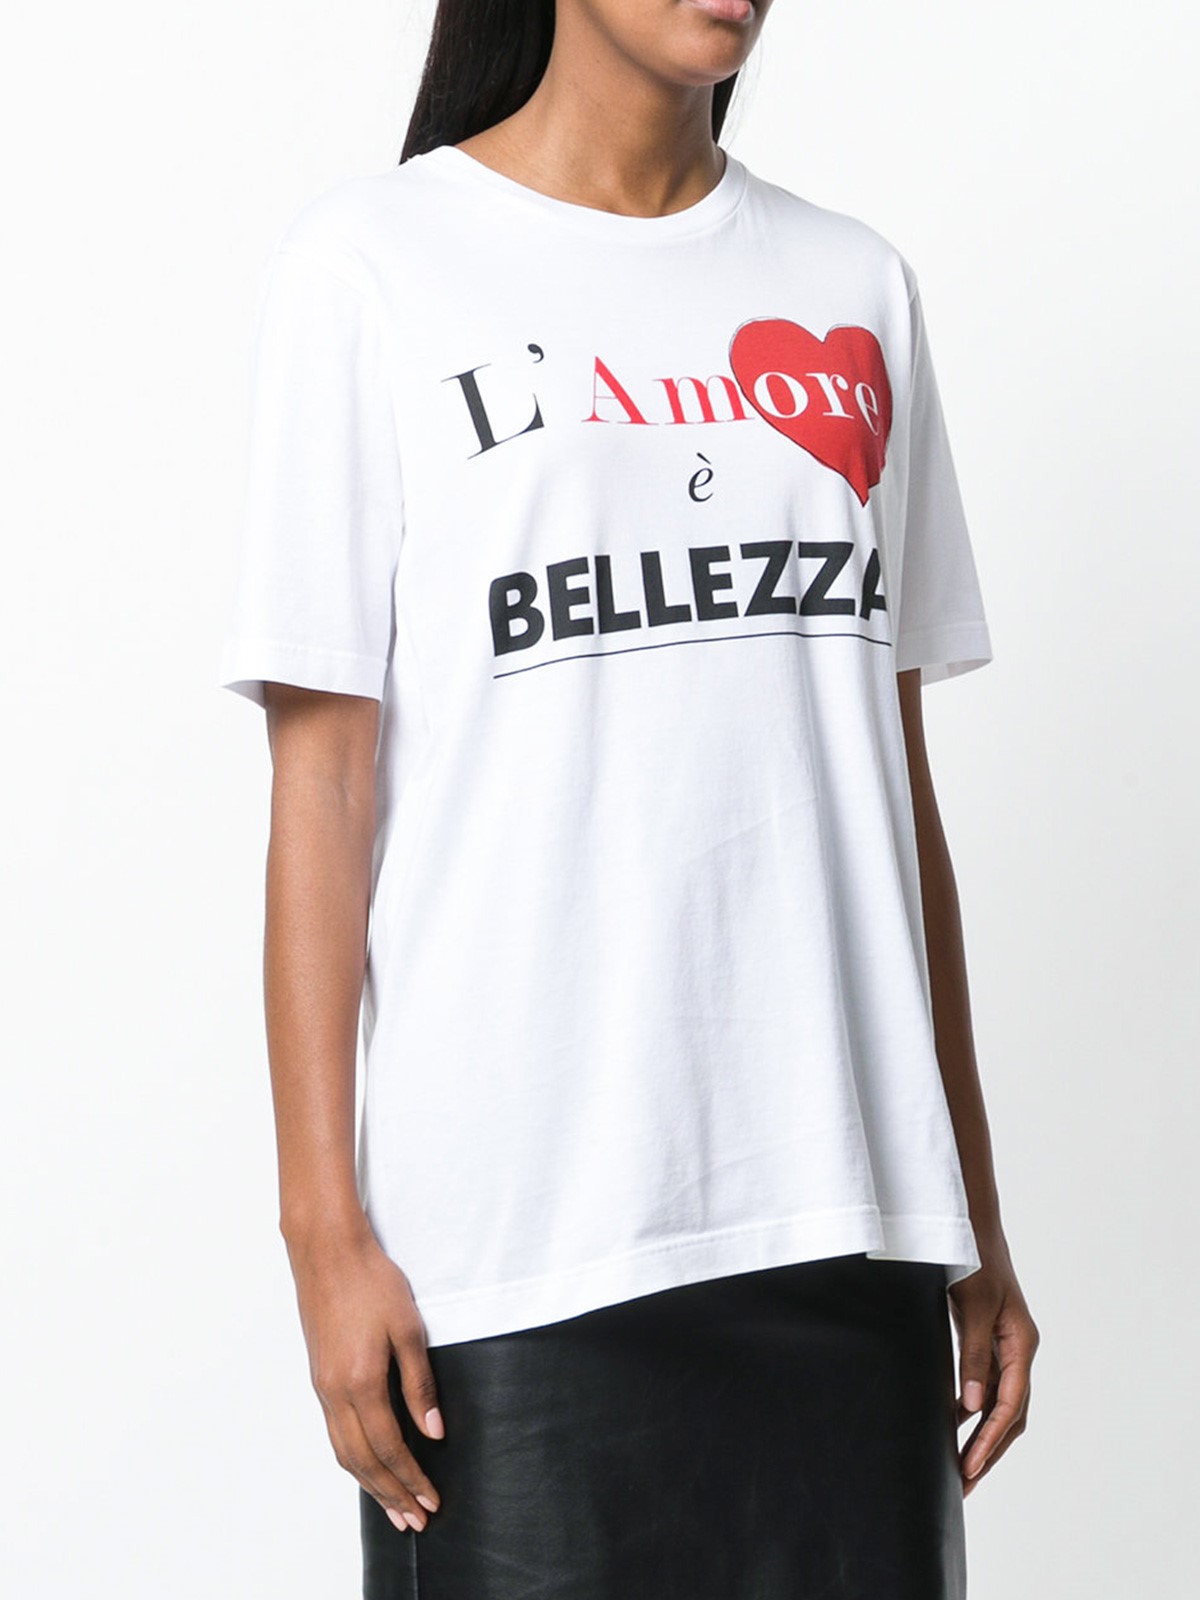 Dolce Gabbana L Amore E Bellezza T Shirt Available On Montiboutique Com